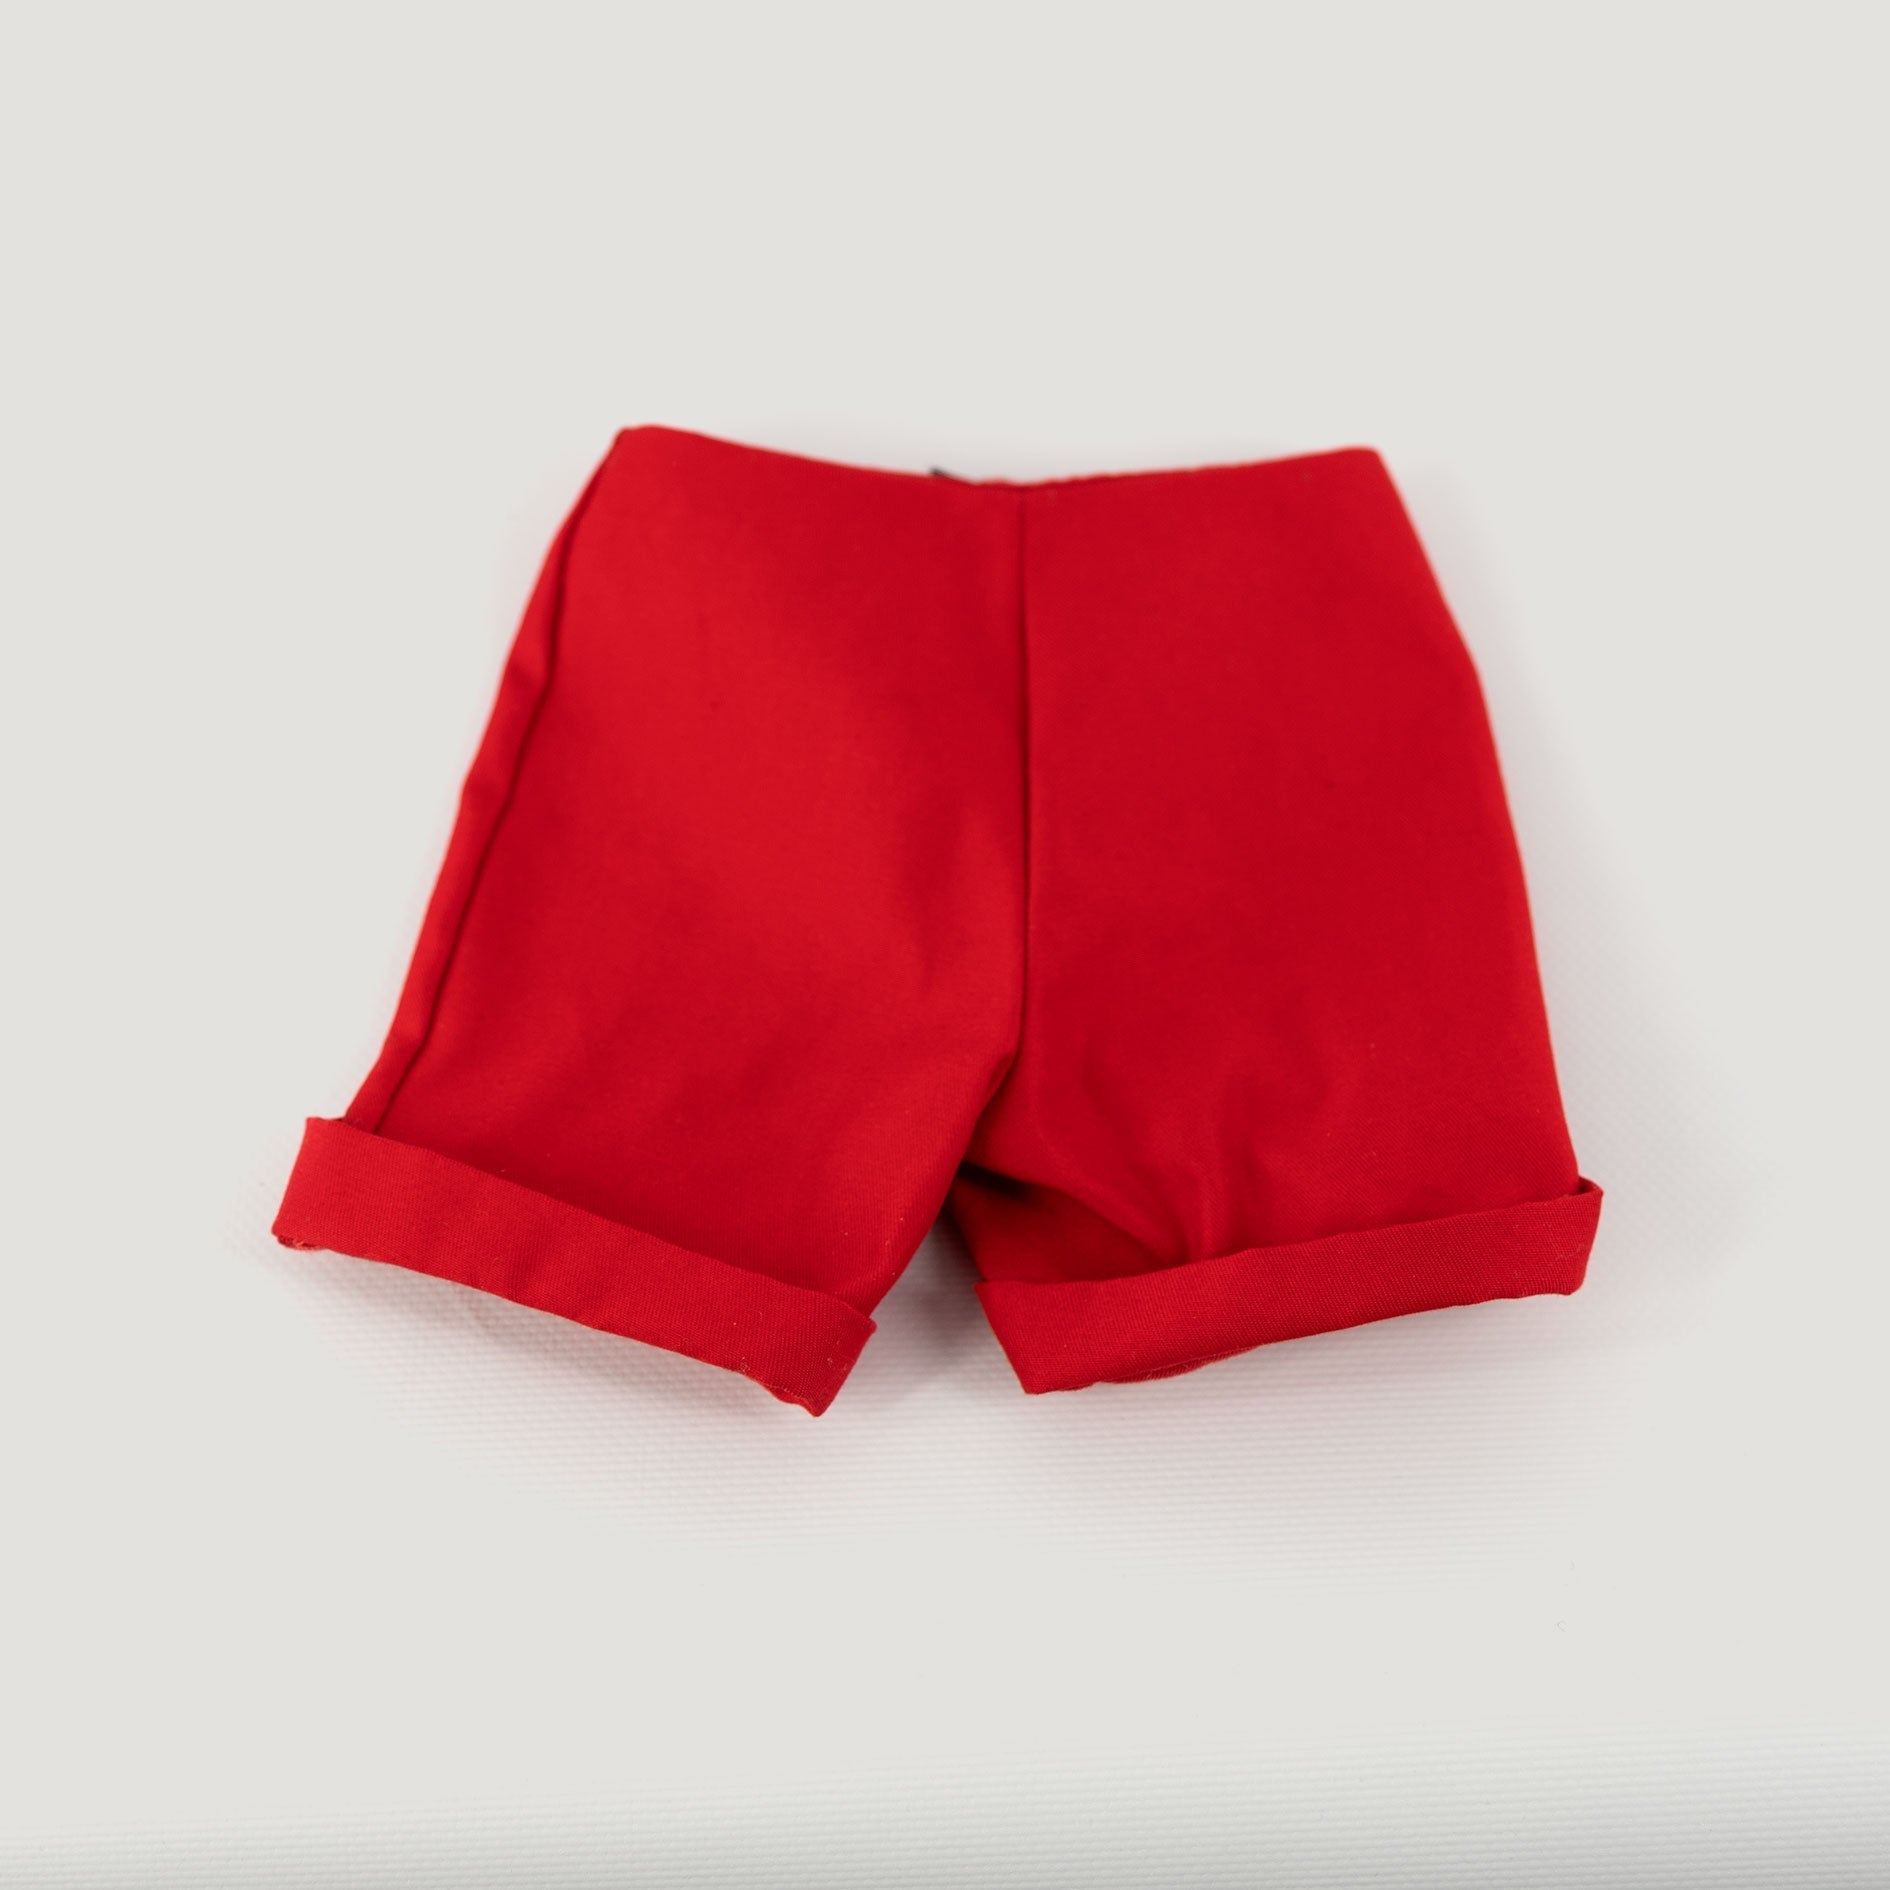 Les pantalons - grand - ADADA Taille Large Rouge